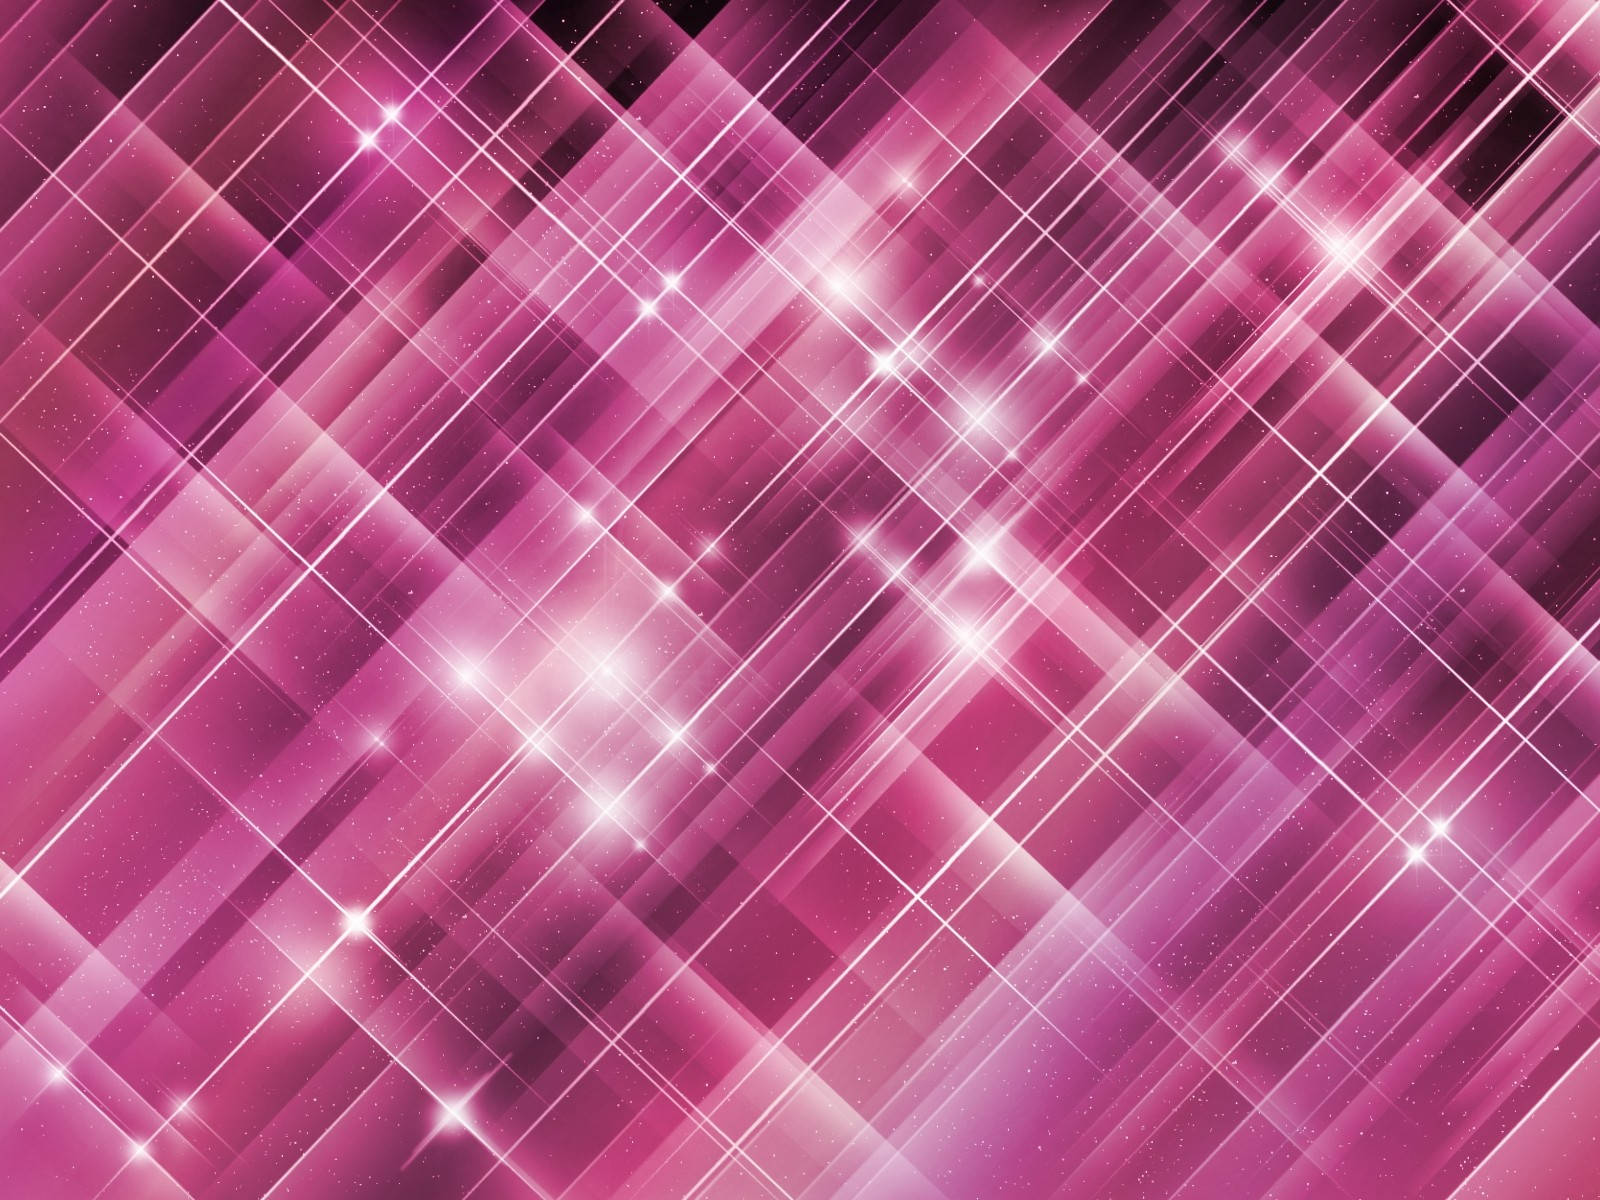 Blurry Pink Sparkled Lights Wallpaper